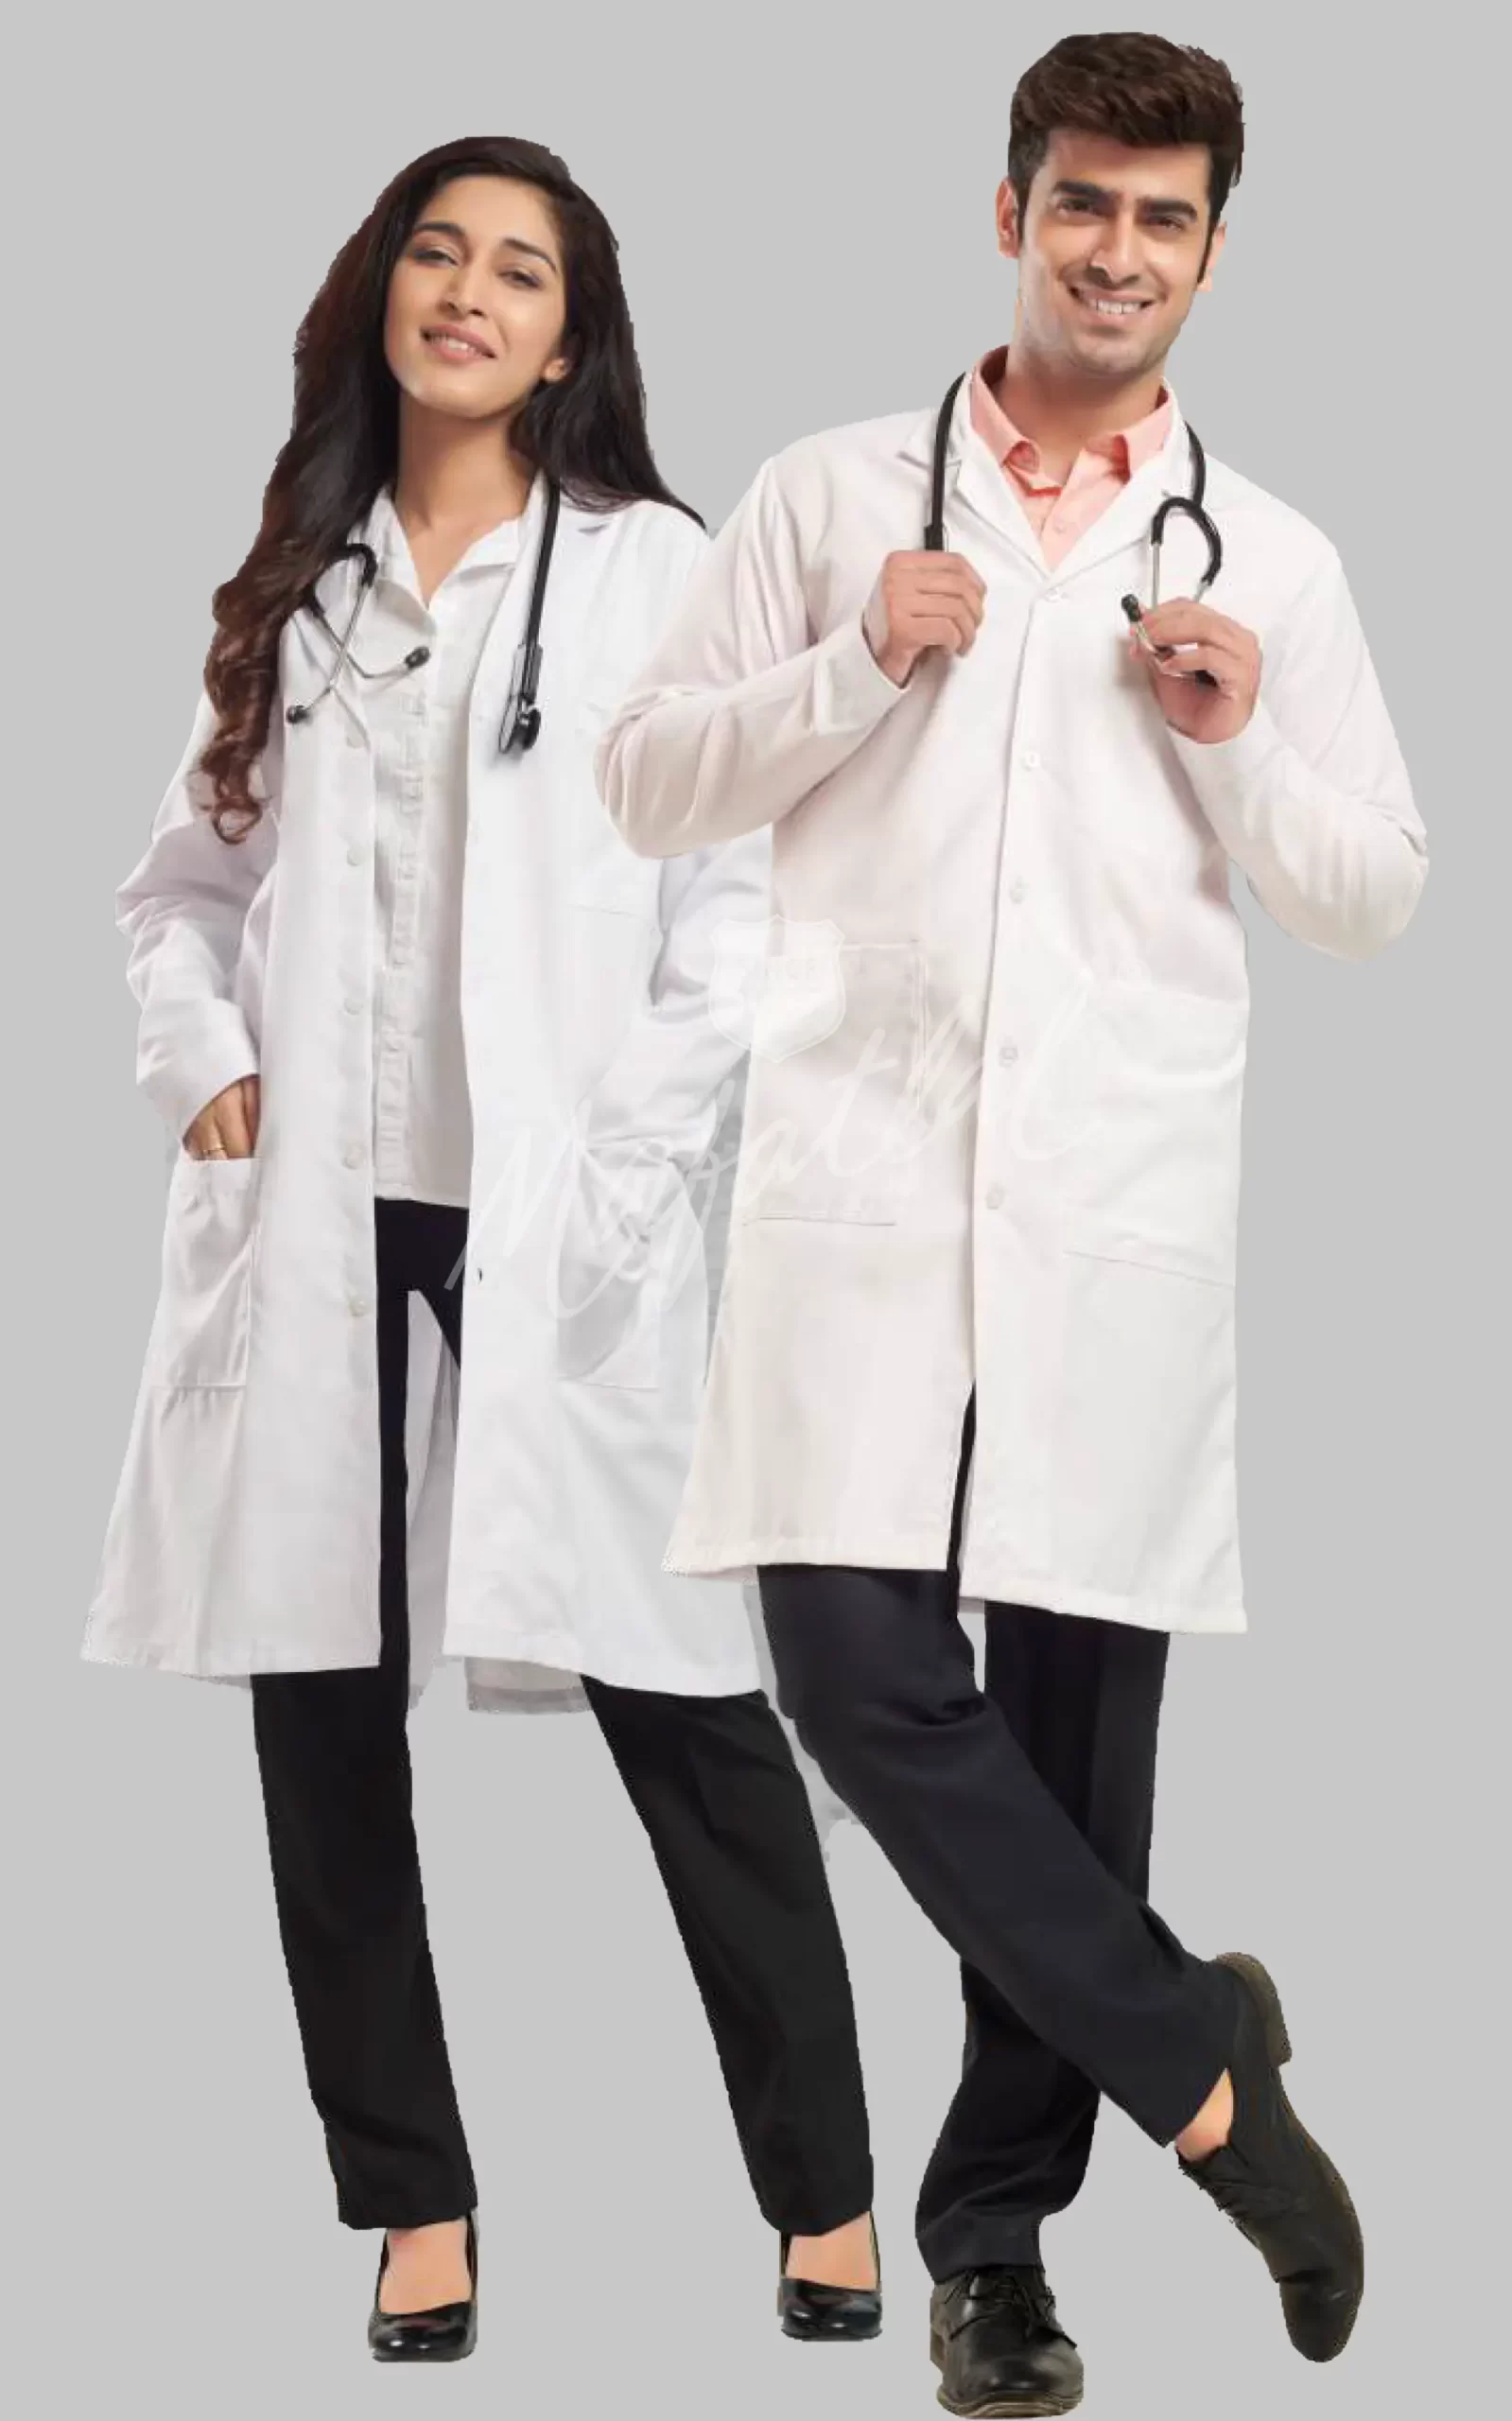 uniform-hospital-male-female-doctor-white